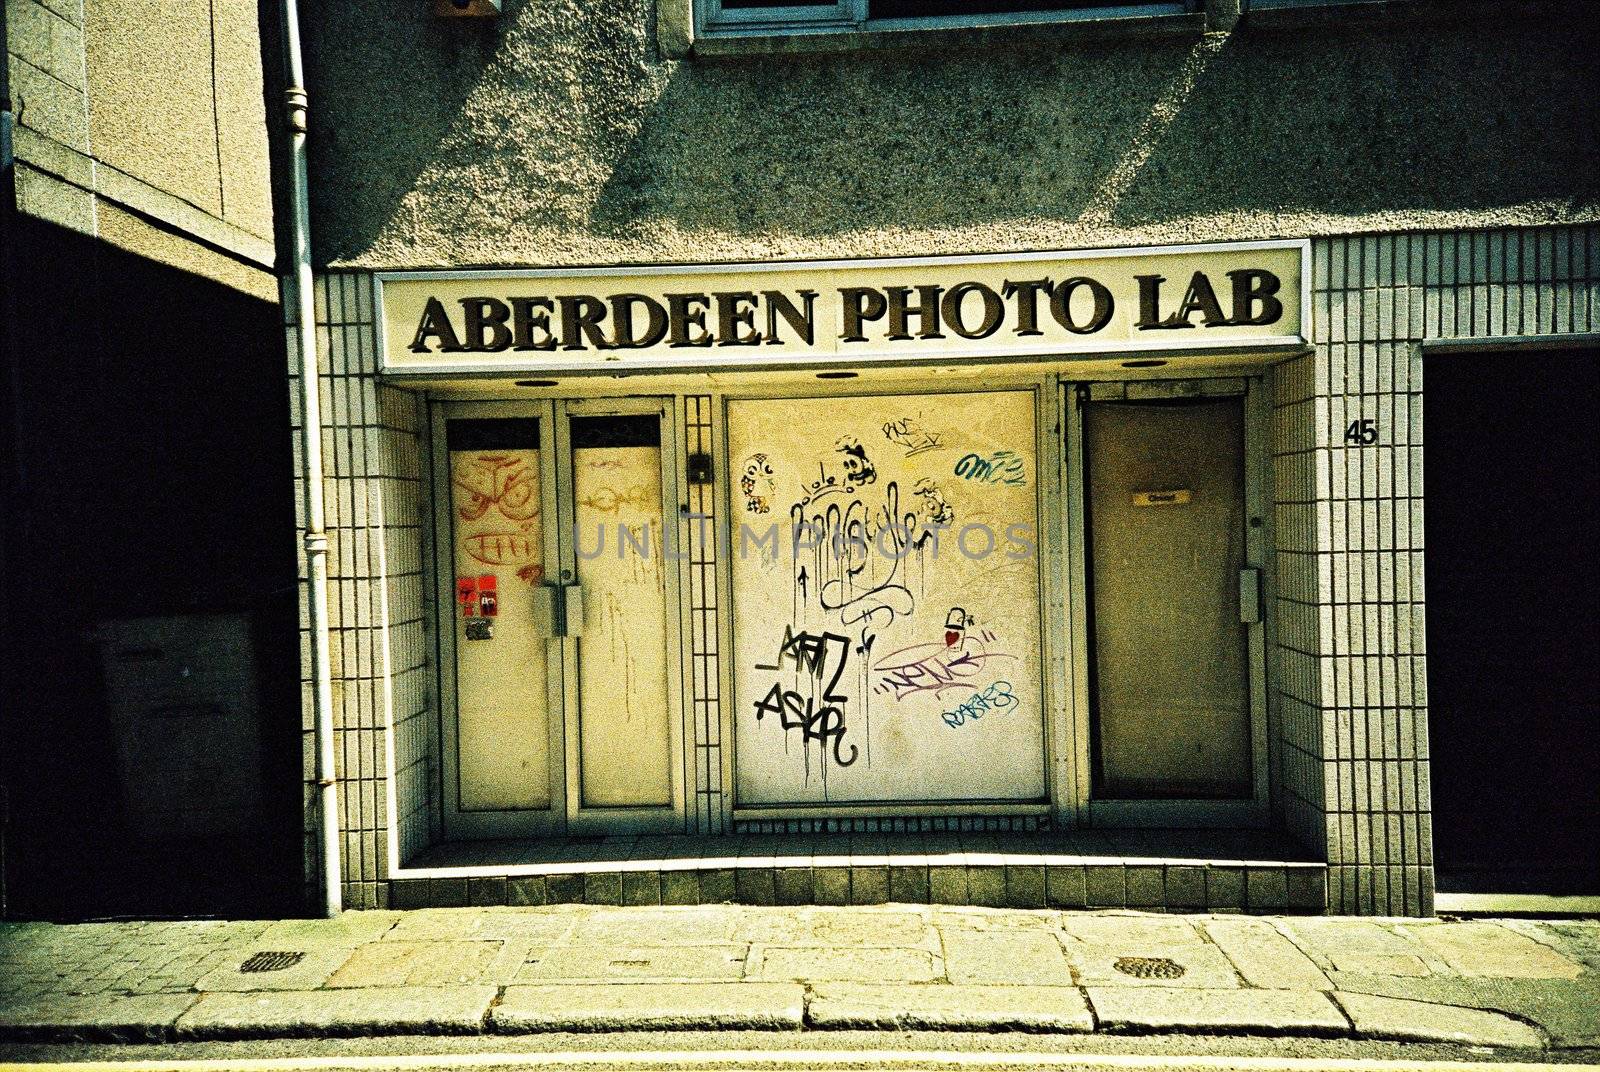 Aberdeen photo lab writen on the wall of a building in Aberdeen